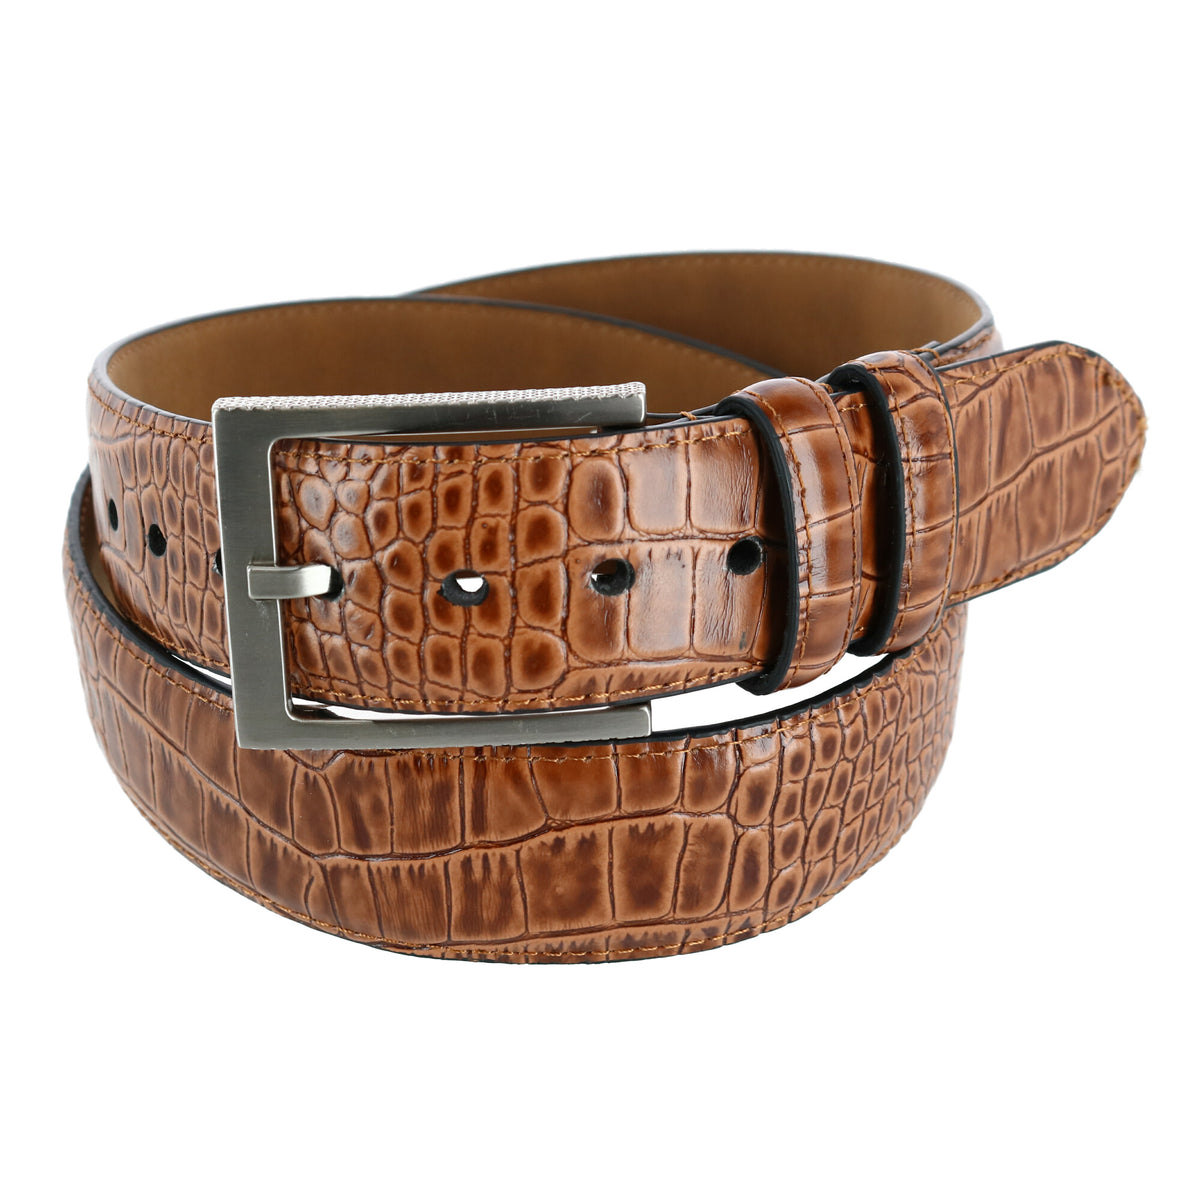 Men's Croco Print Leather Belt by Greg Norman | Dress Belts at ...